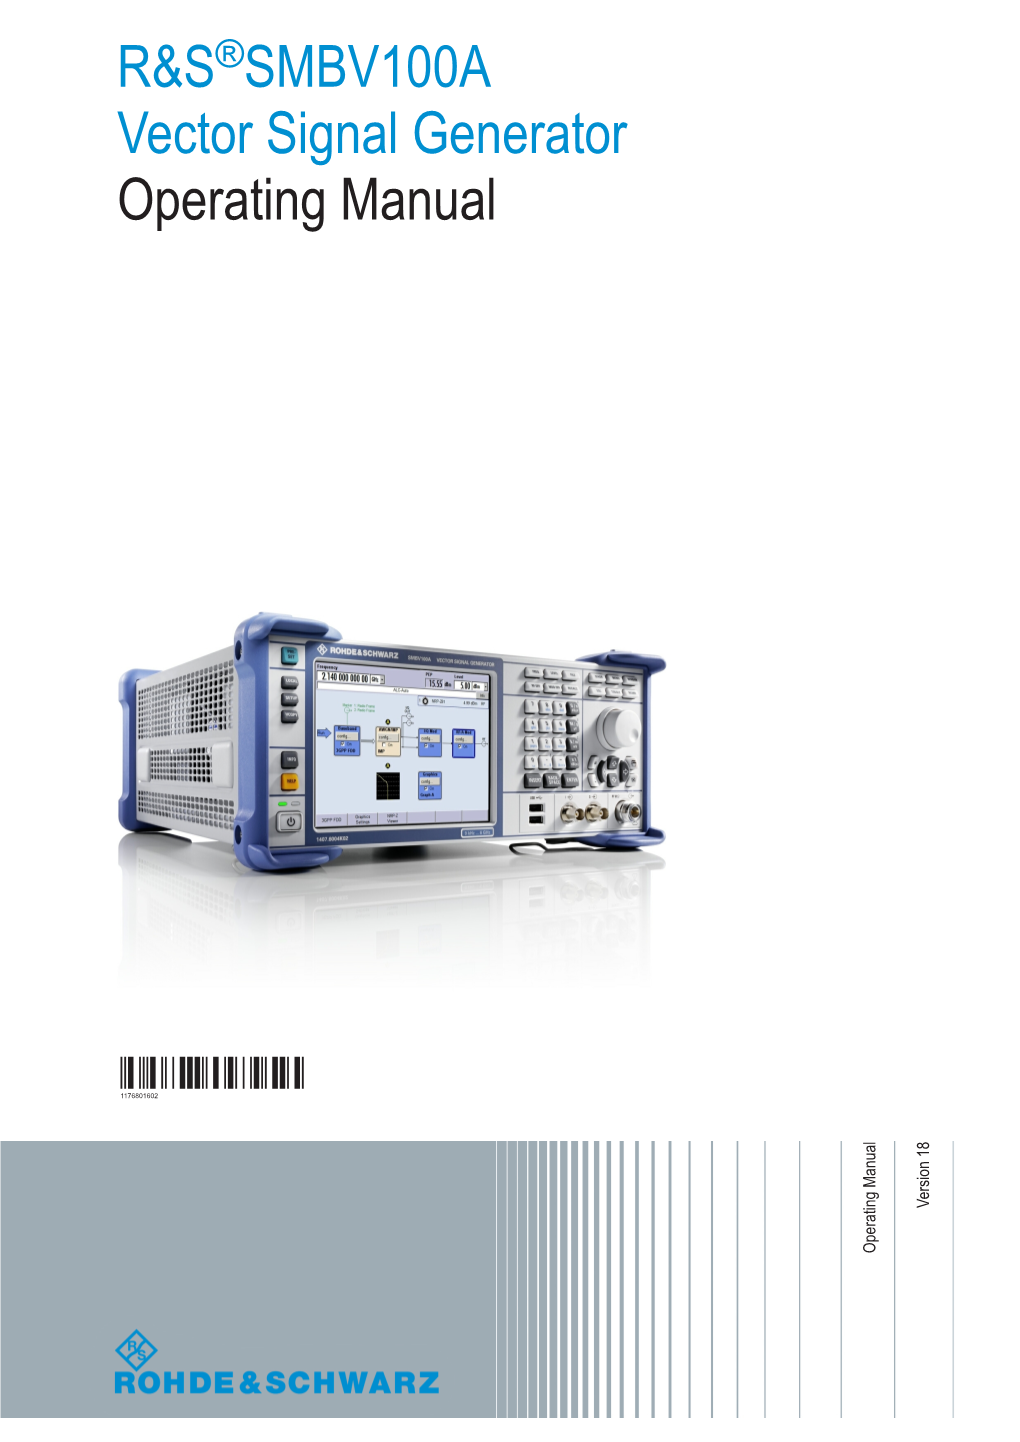 R&S SMBV100A Operating Manual